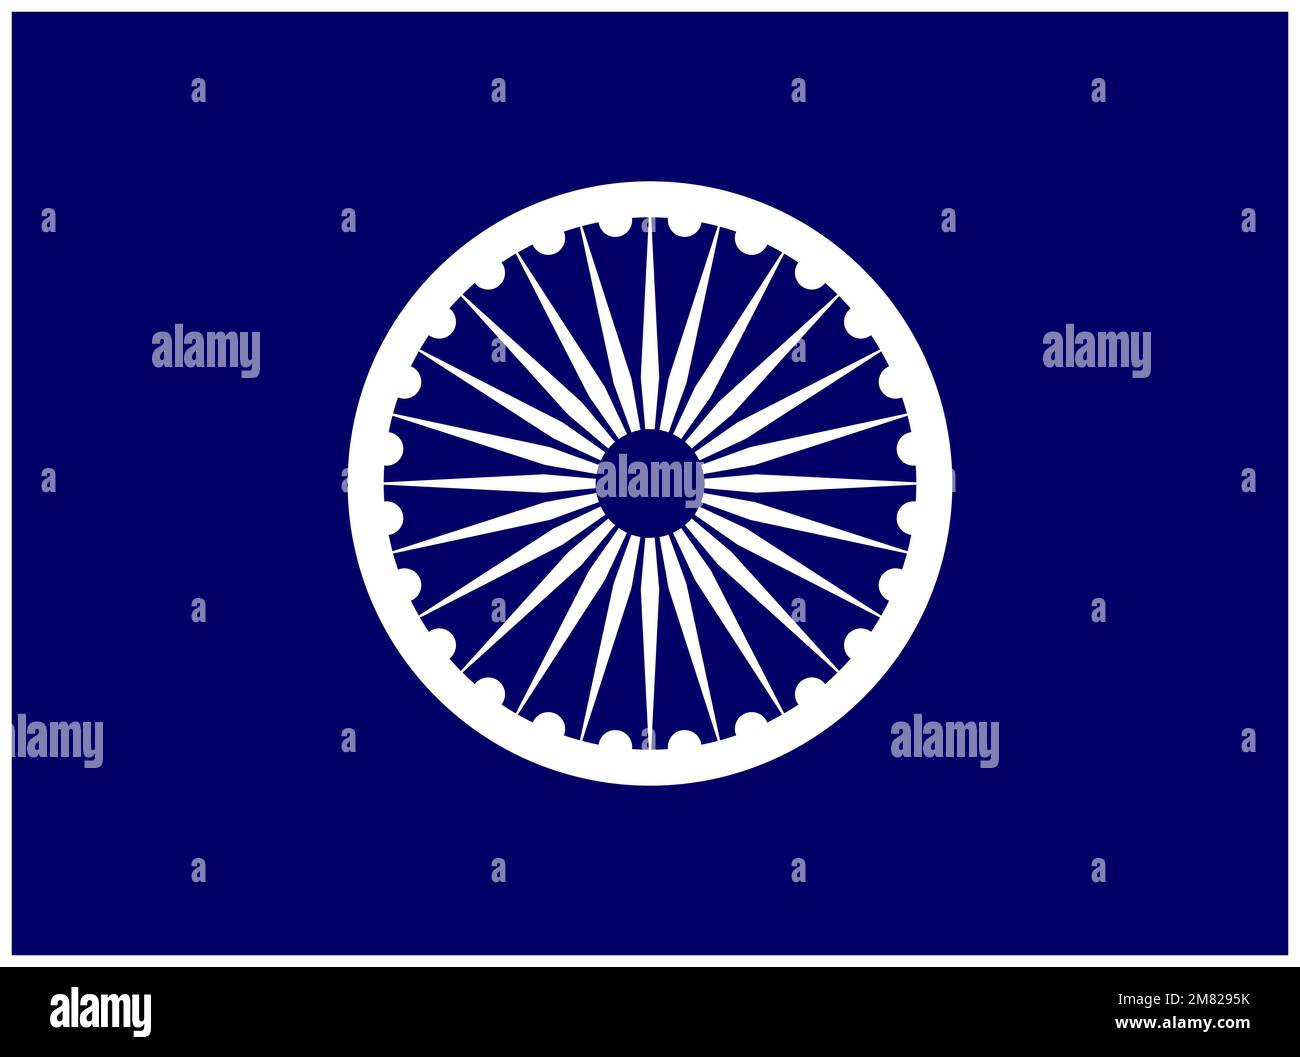 flag of Indo Aryan ethnoreligious groups Dalit Buddhists. flag representing ethnic group or culture, regional authorities. no flagpole. Plane design, Stock Photo